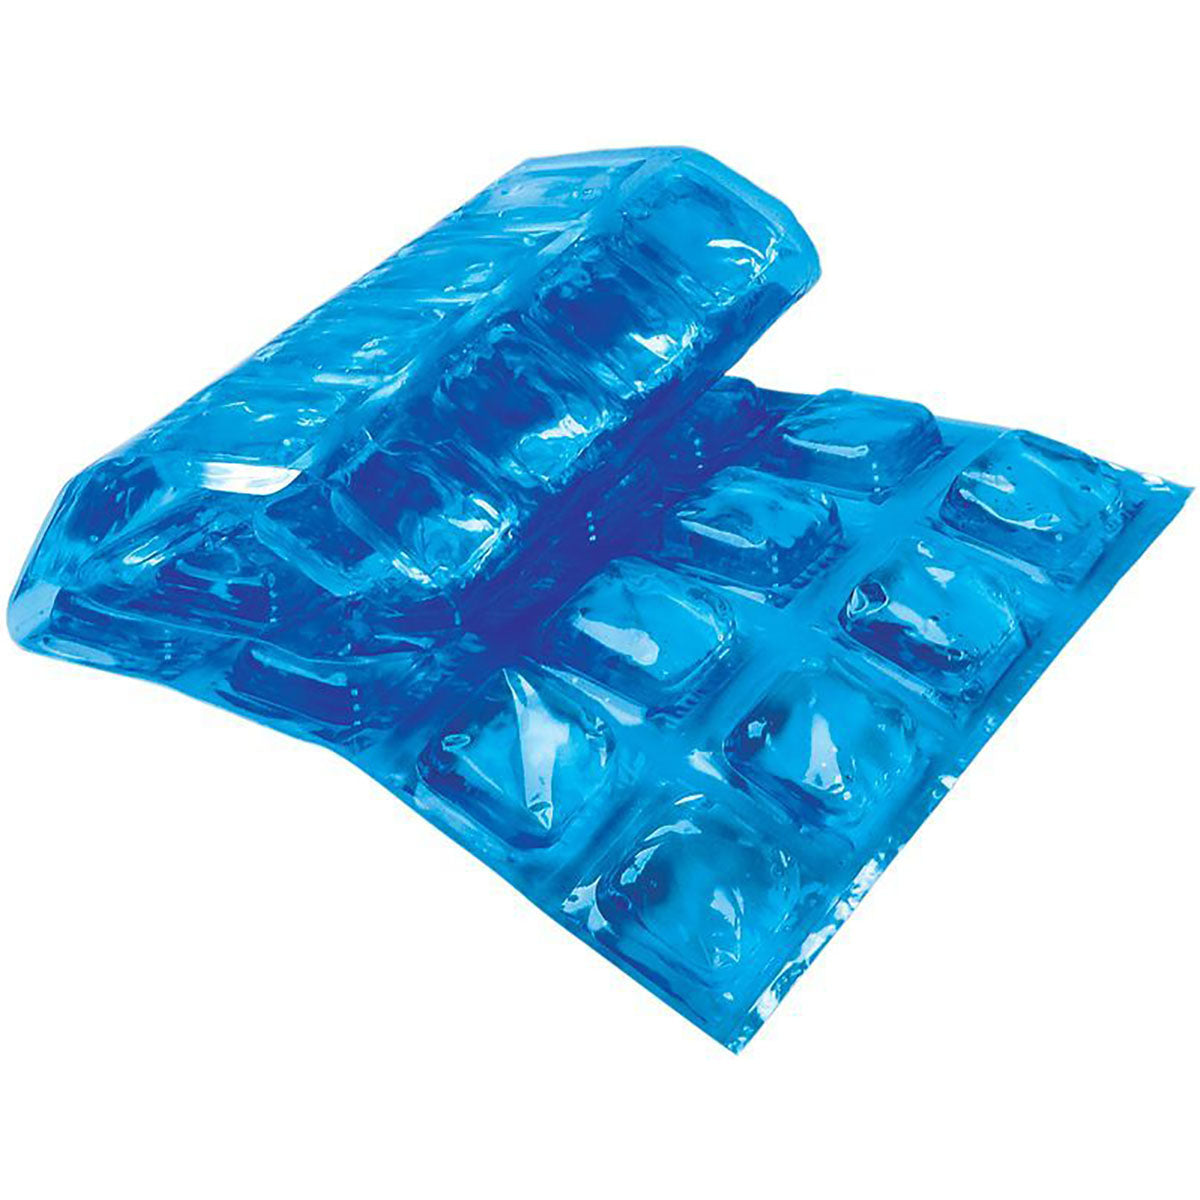 IGLOO MaxCold 44-Cube Natural Ice Sheet - Blue IGLOO